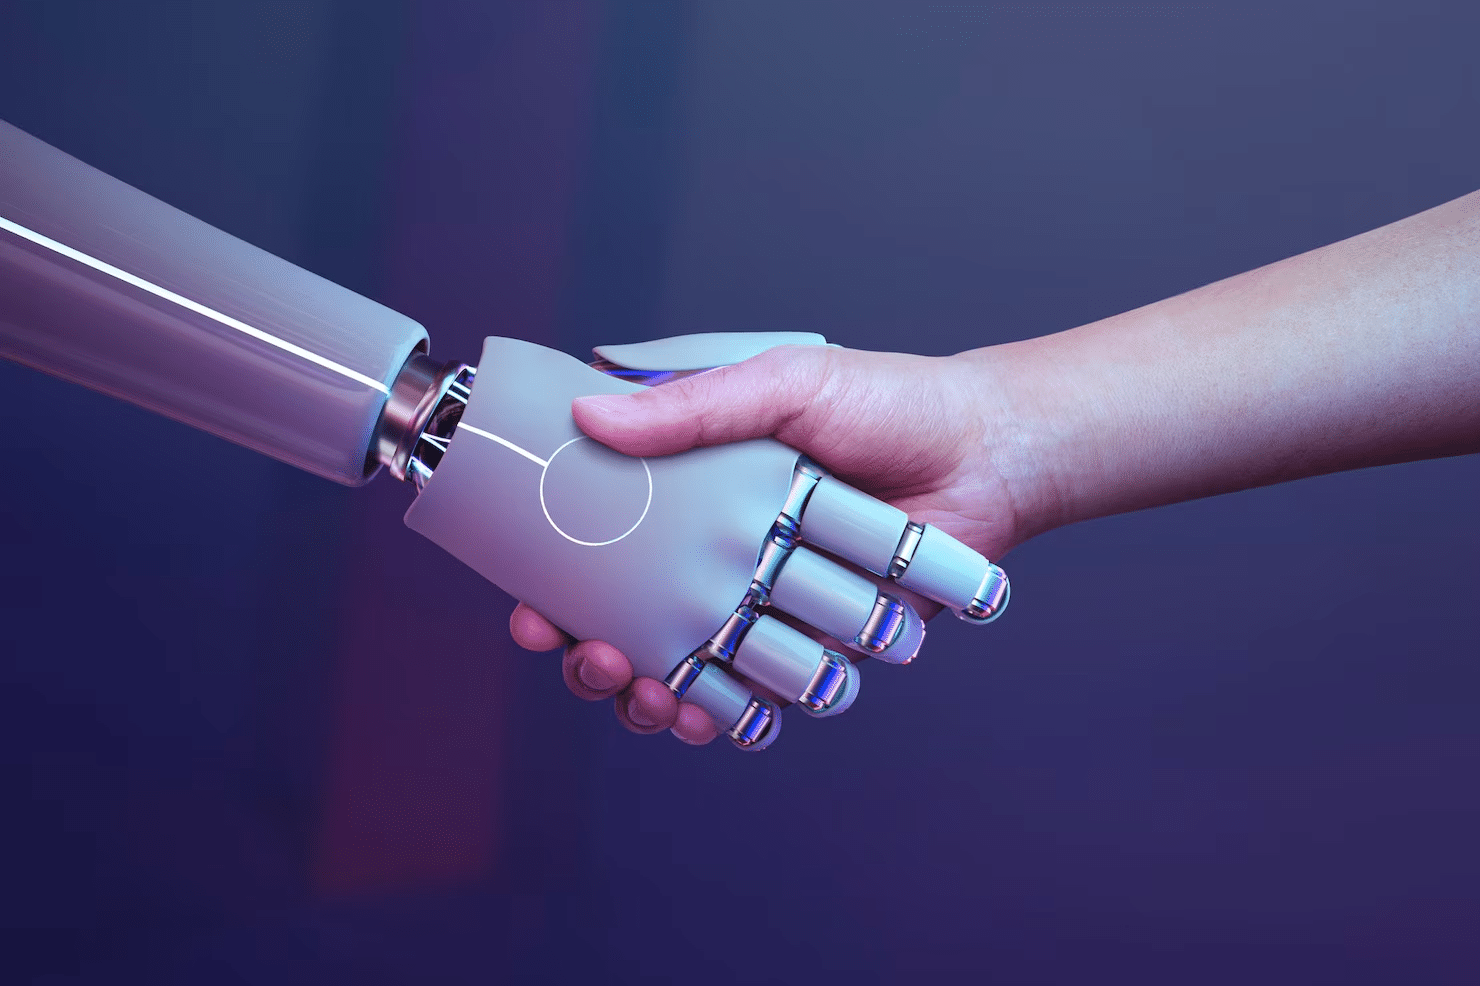 Top 10 AI Processors of 2024